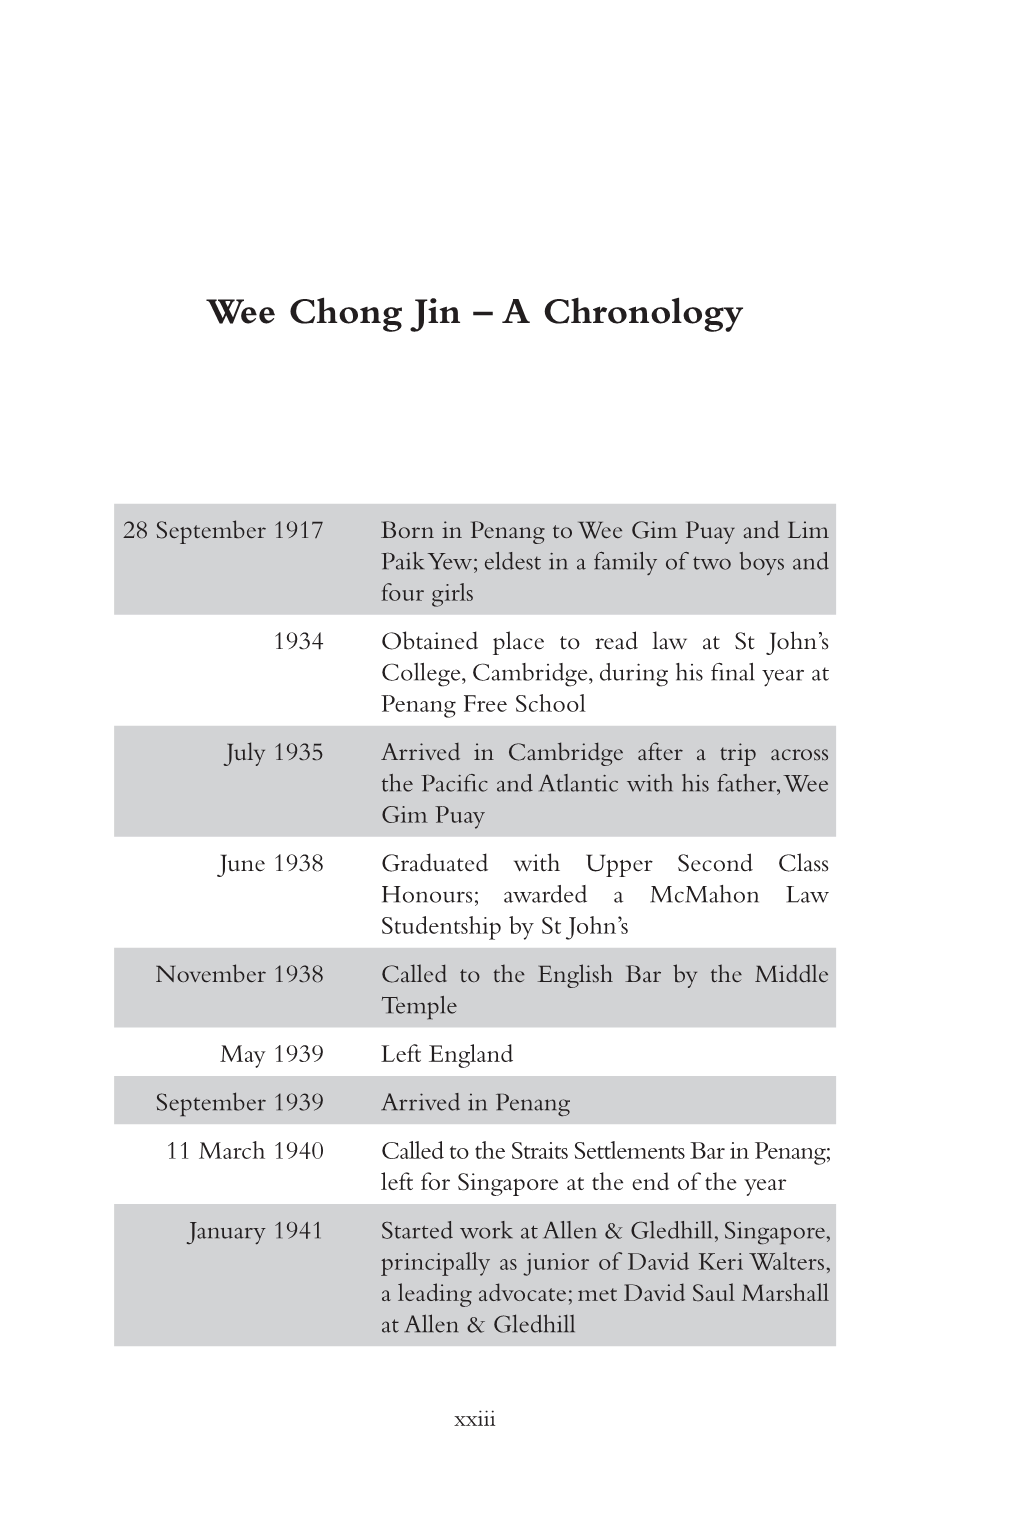 Wee Chong Jin – a Chronology